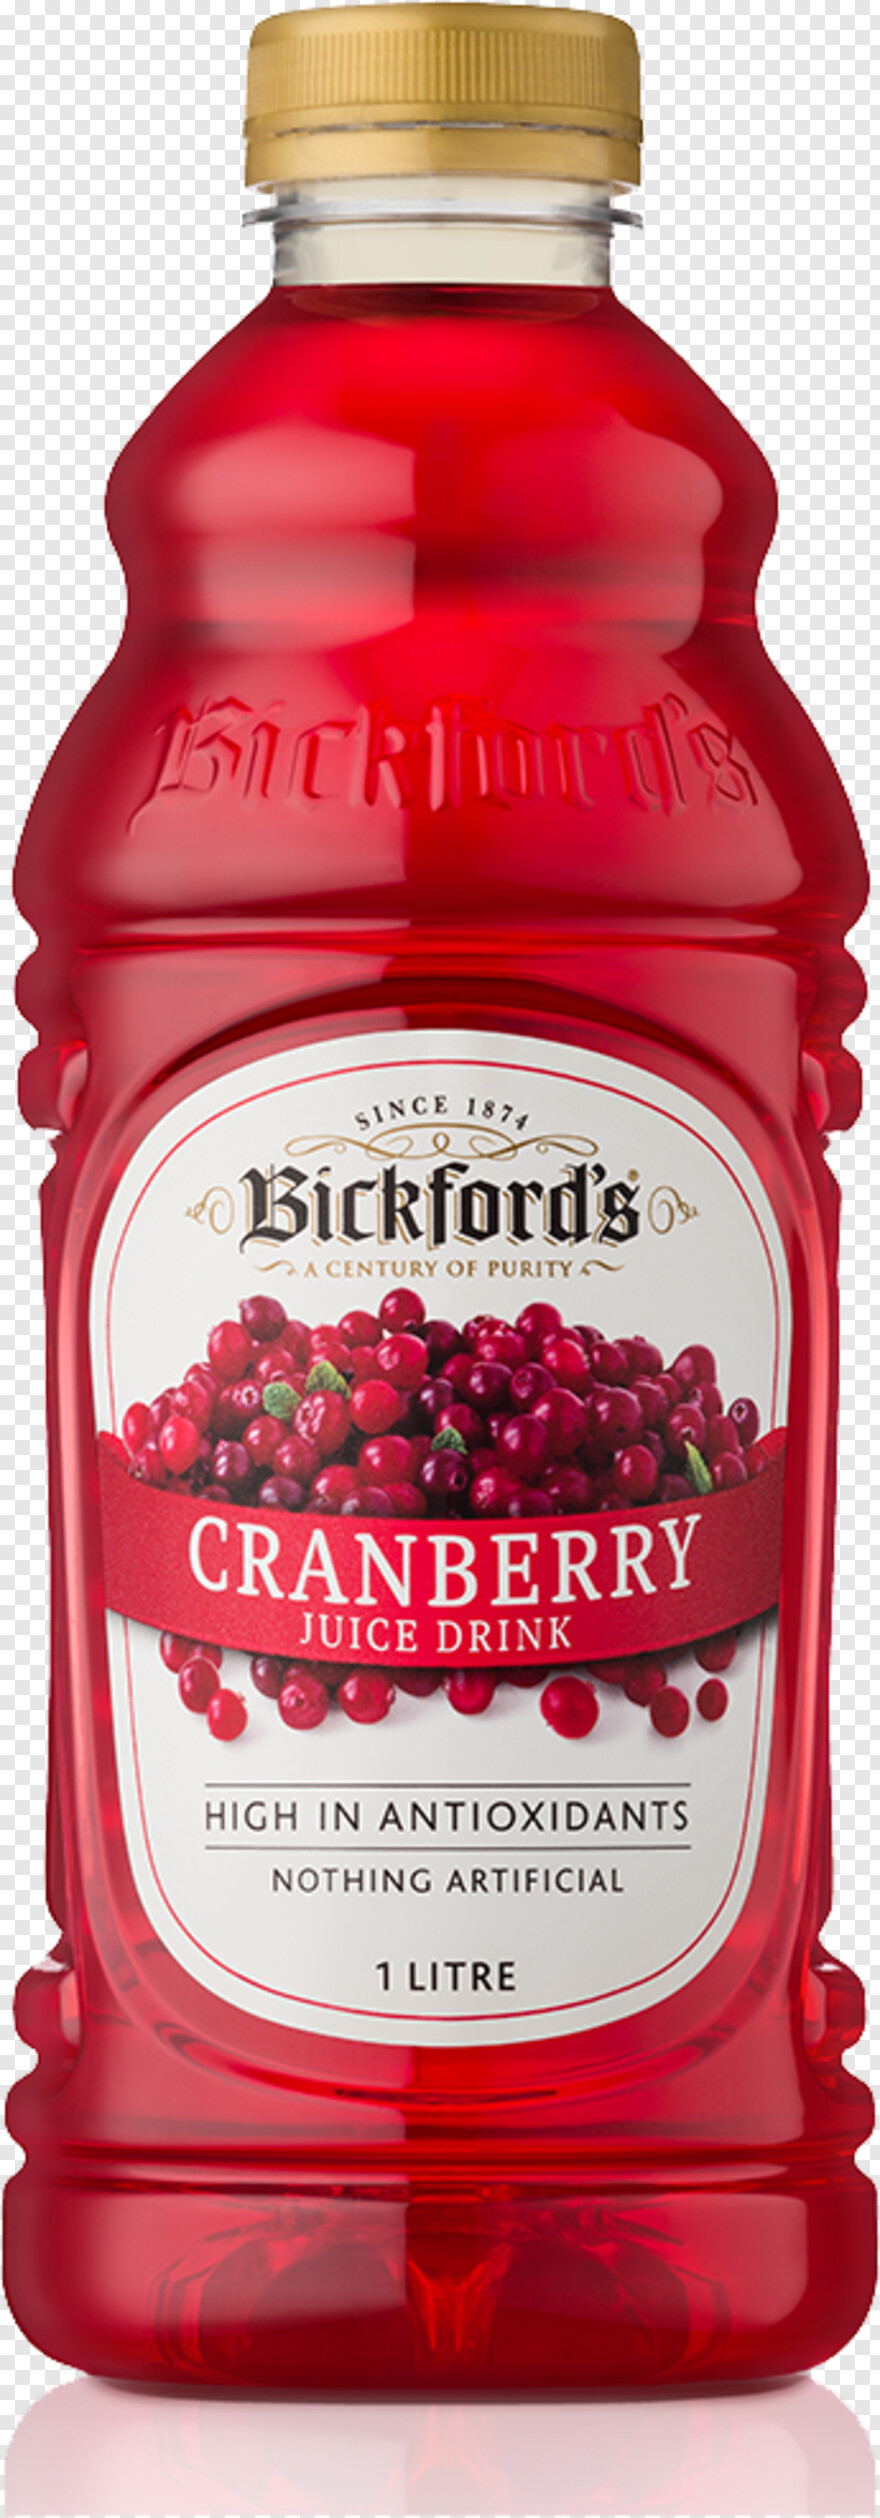 cranberry # 948157